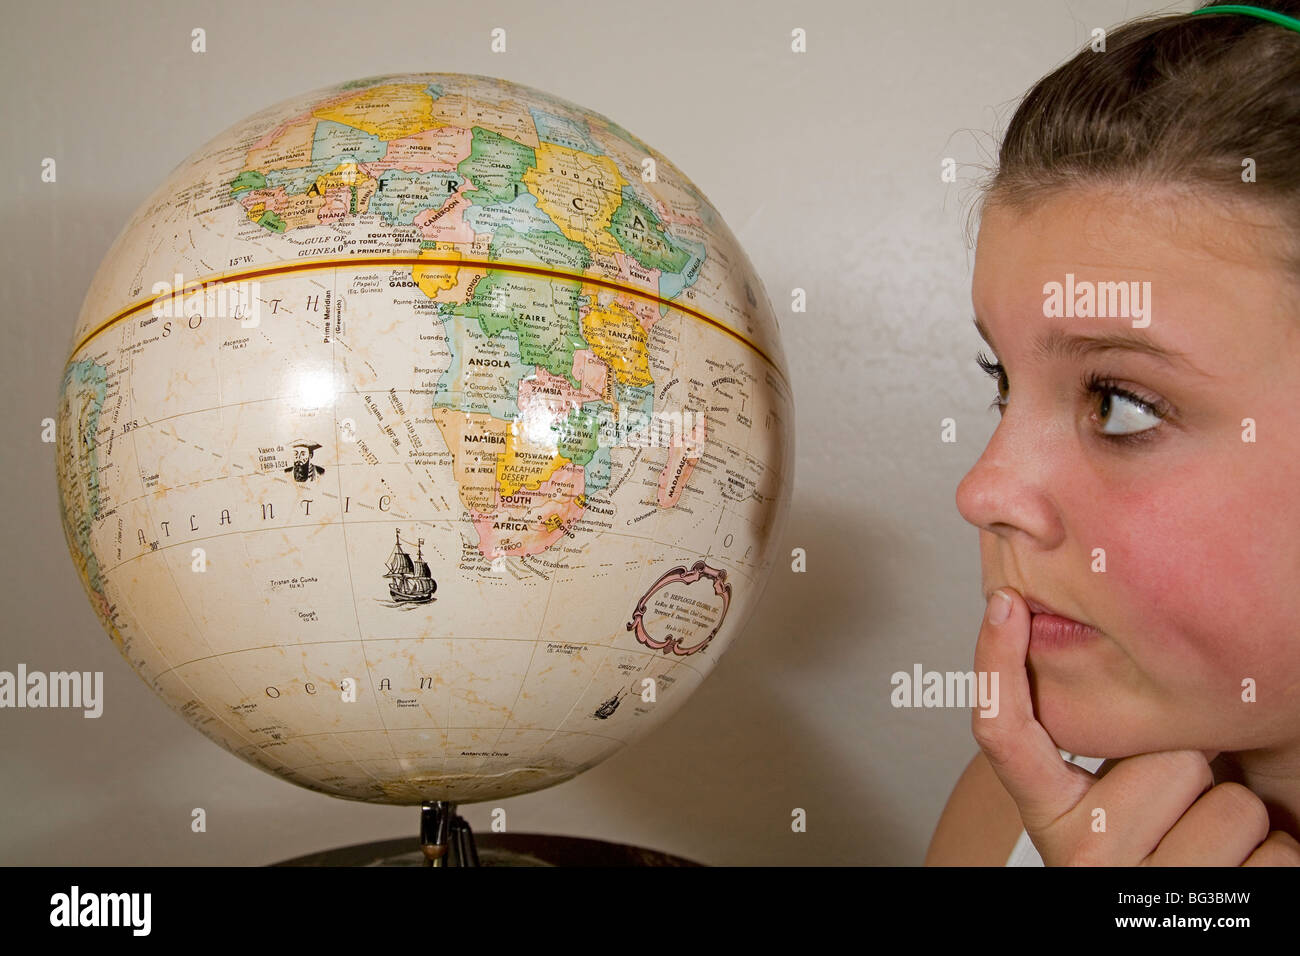 middle earth globe